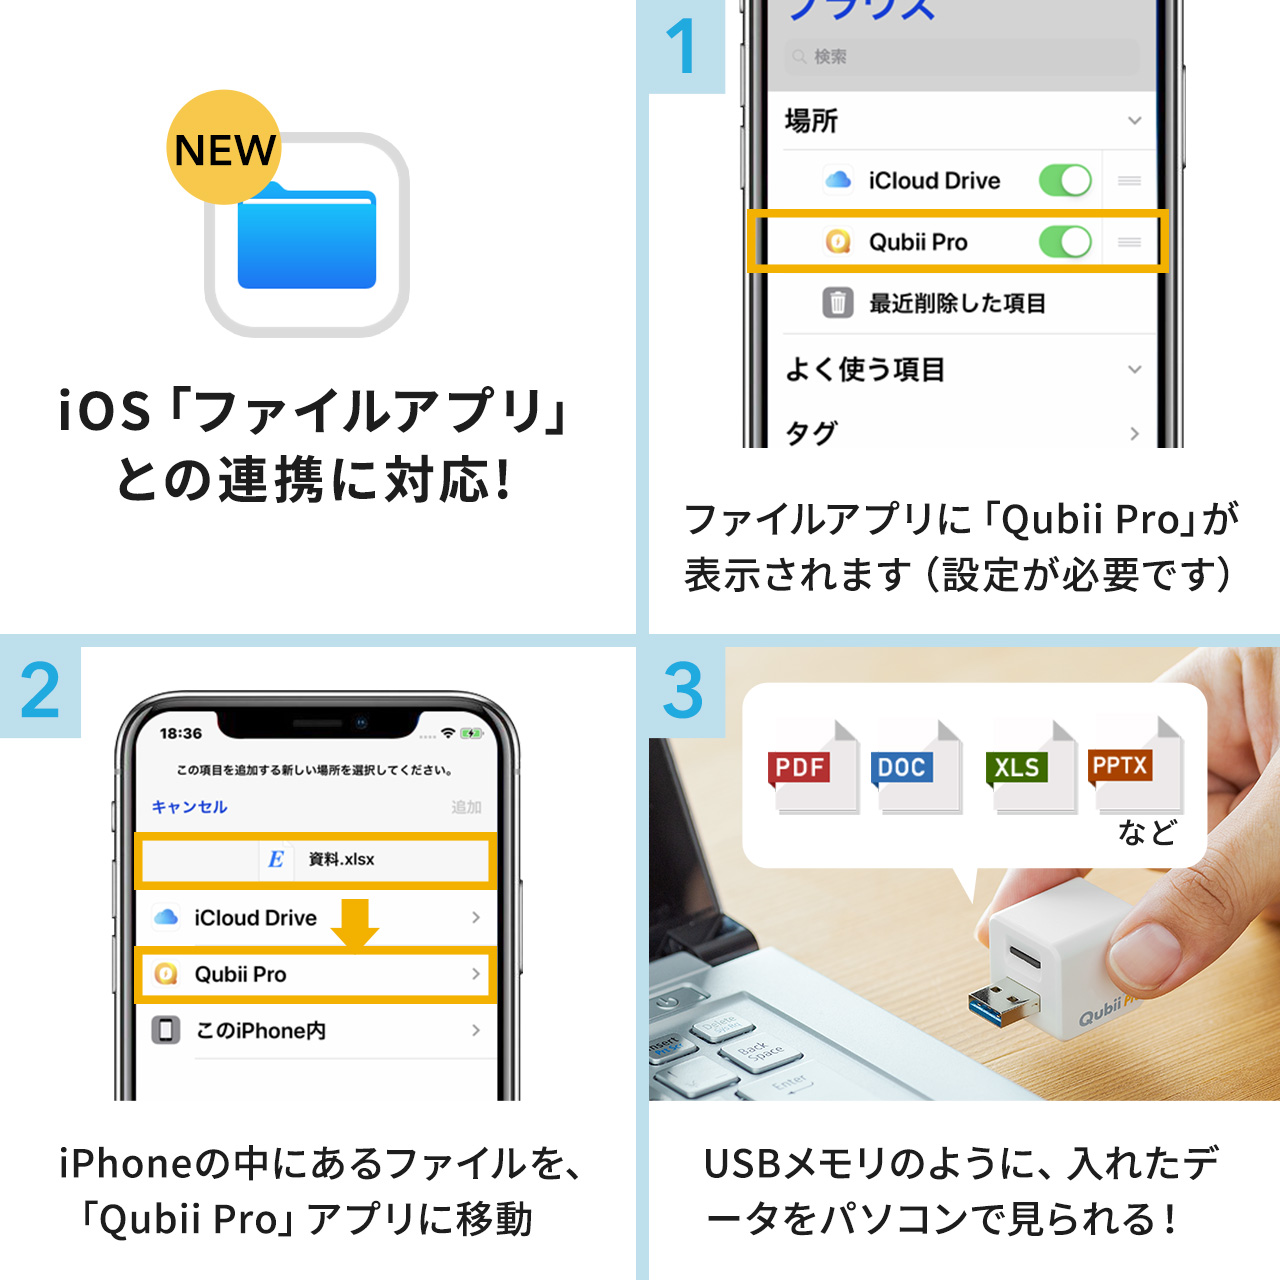 Qubii Pro iPhone iPad obNAbv microSDɕۑ USB3.1 Gen1 zCg iPhone15Ή 400-ADRIP011W